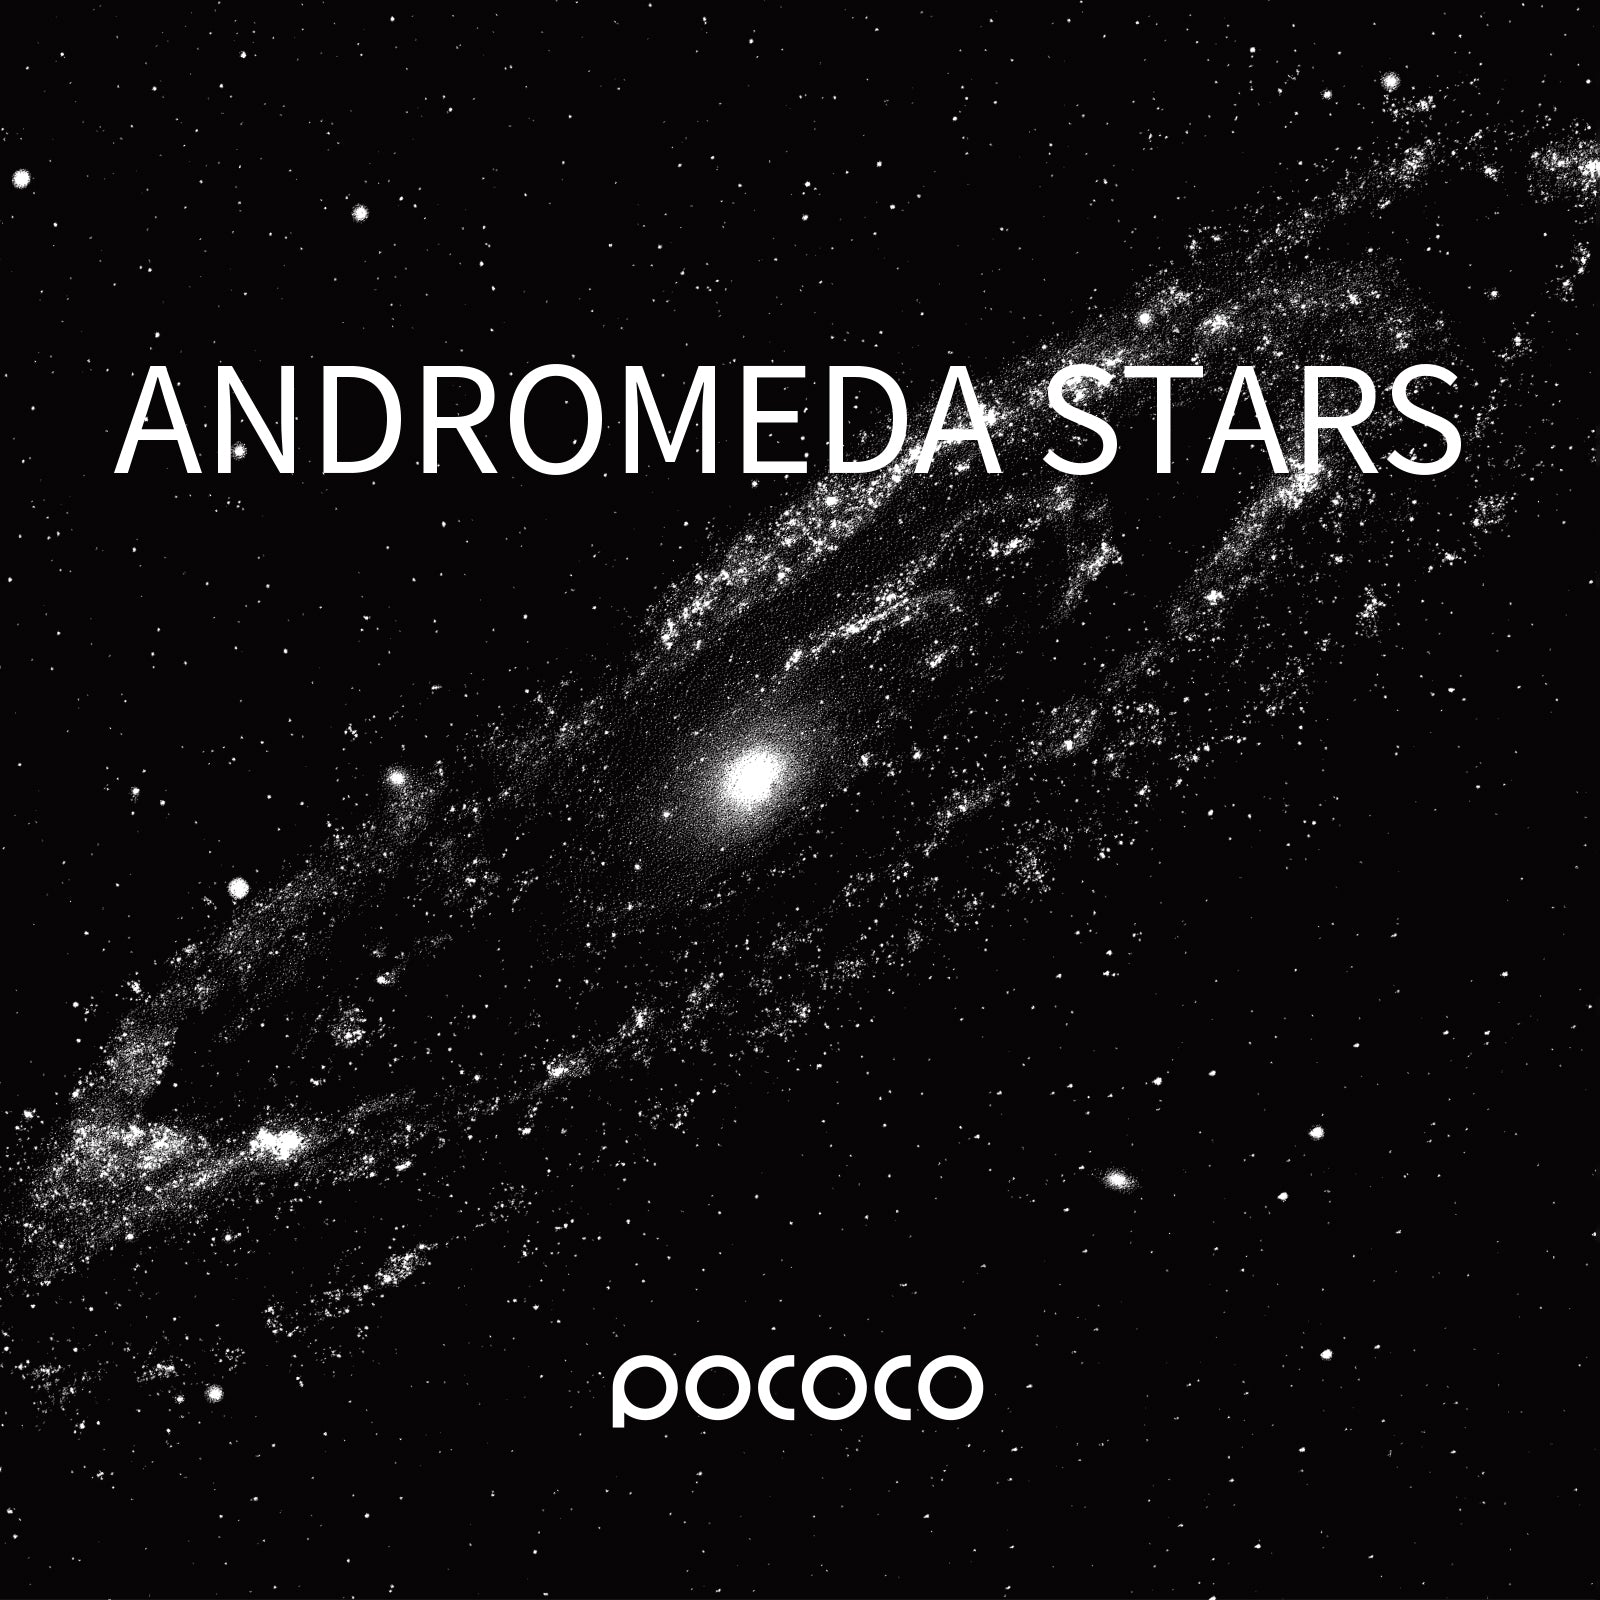 POCOCO Home Planetarium Star Projector: Ultra Clear Galaxy Projector